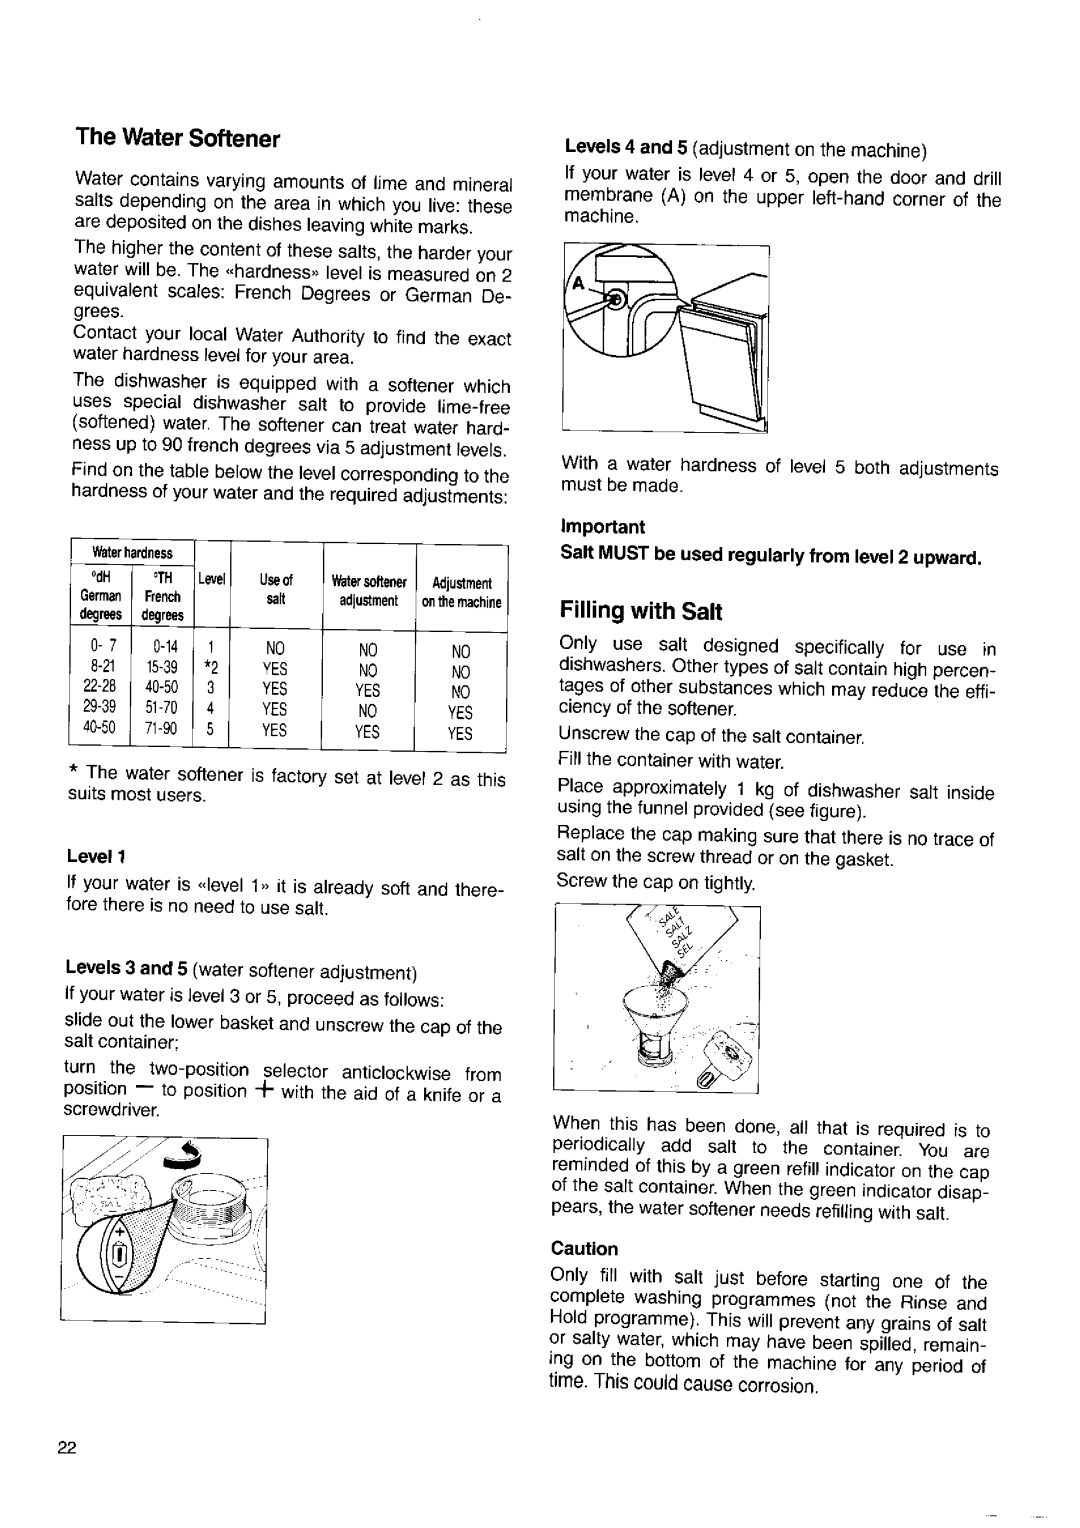 Zanussi ZP3414 manual 